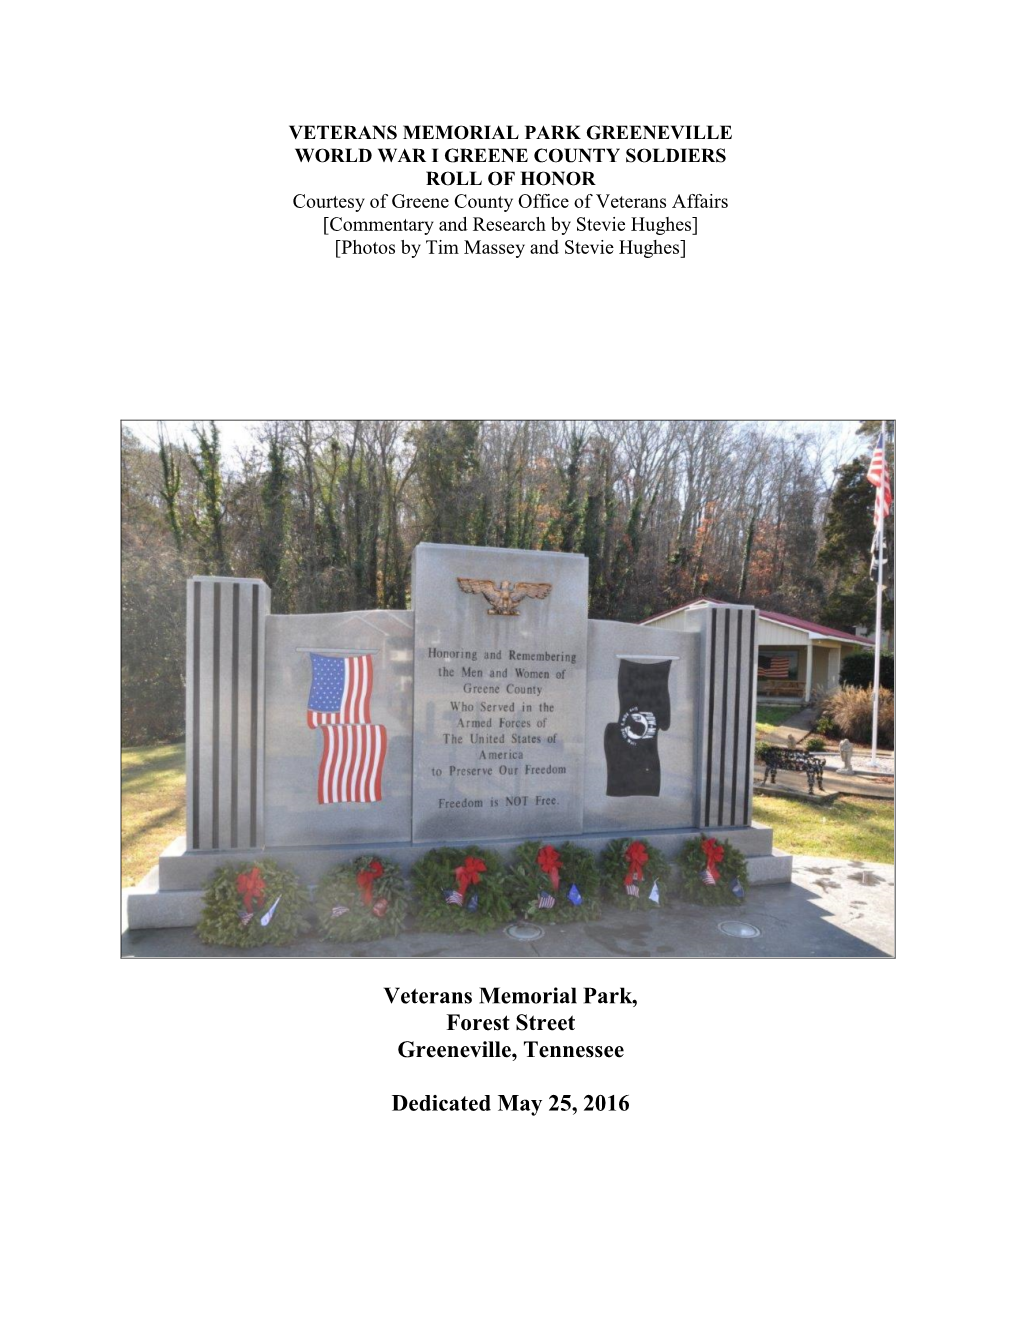 Veterans Memorial Park, Forest Street Greeneville, Tennessee Dedicated